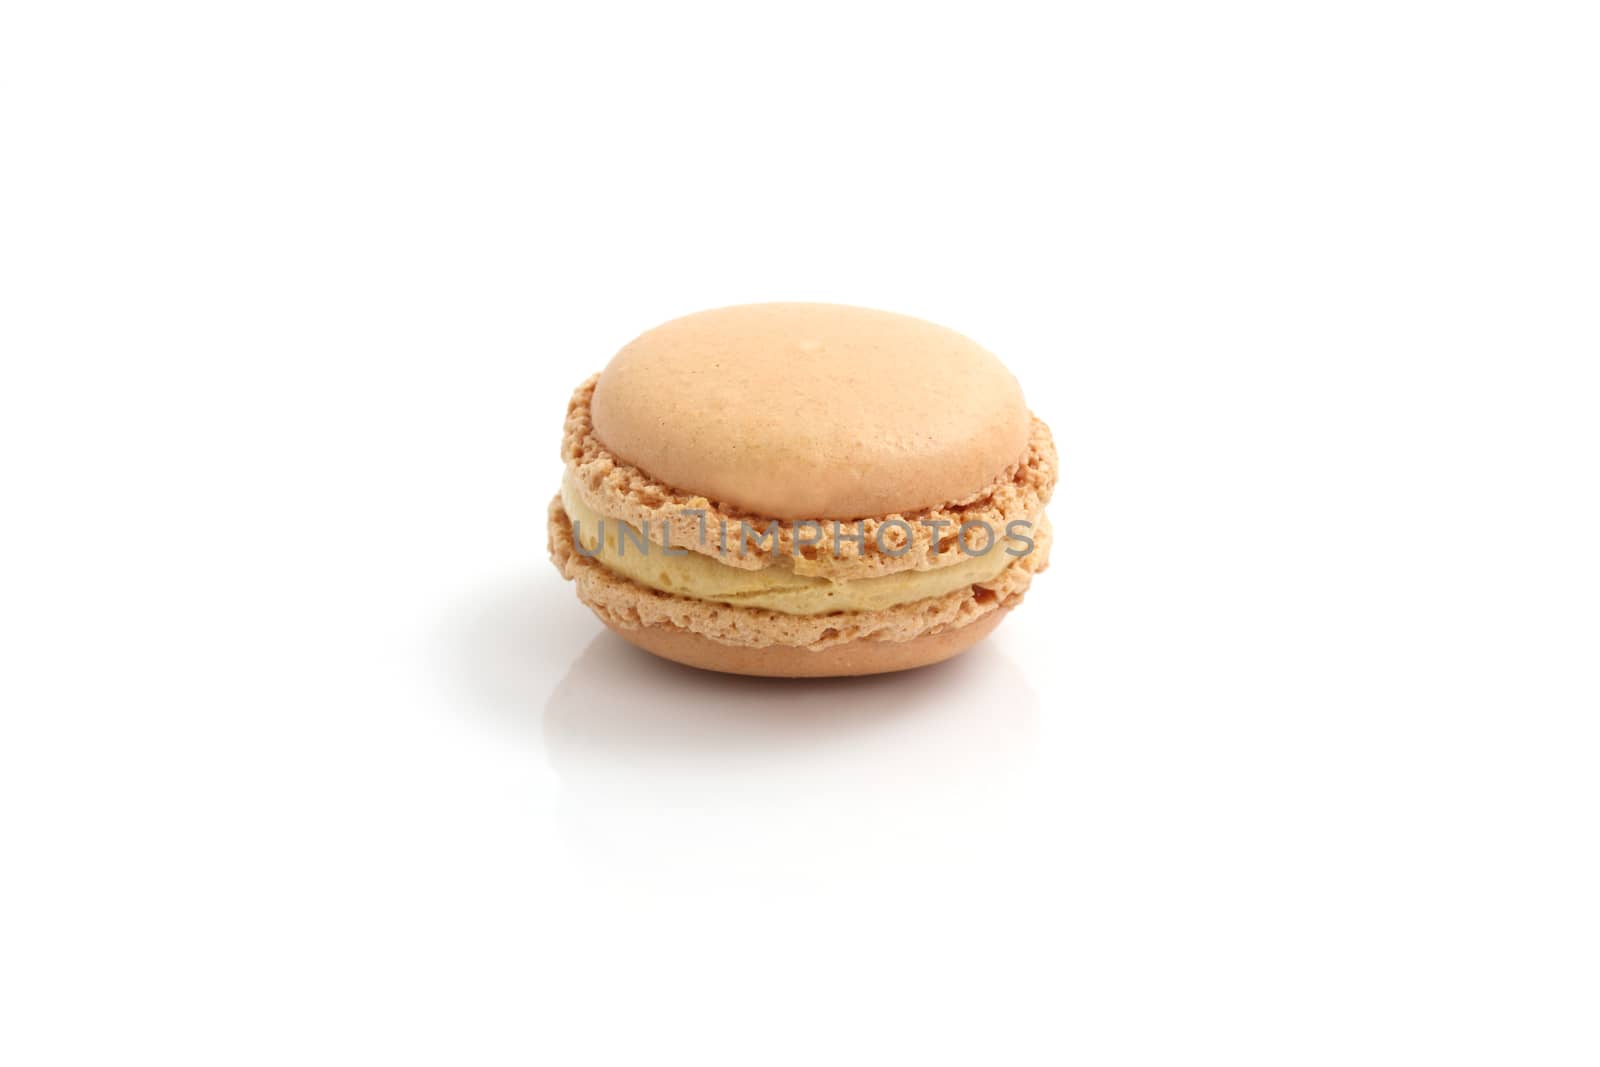 Macaron isolated in white background by piyato